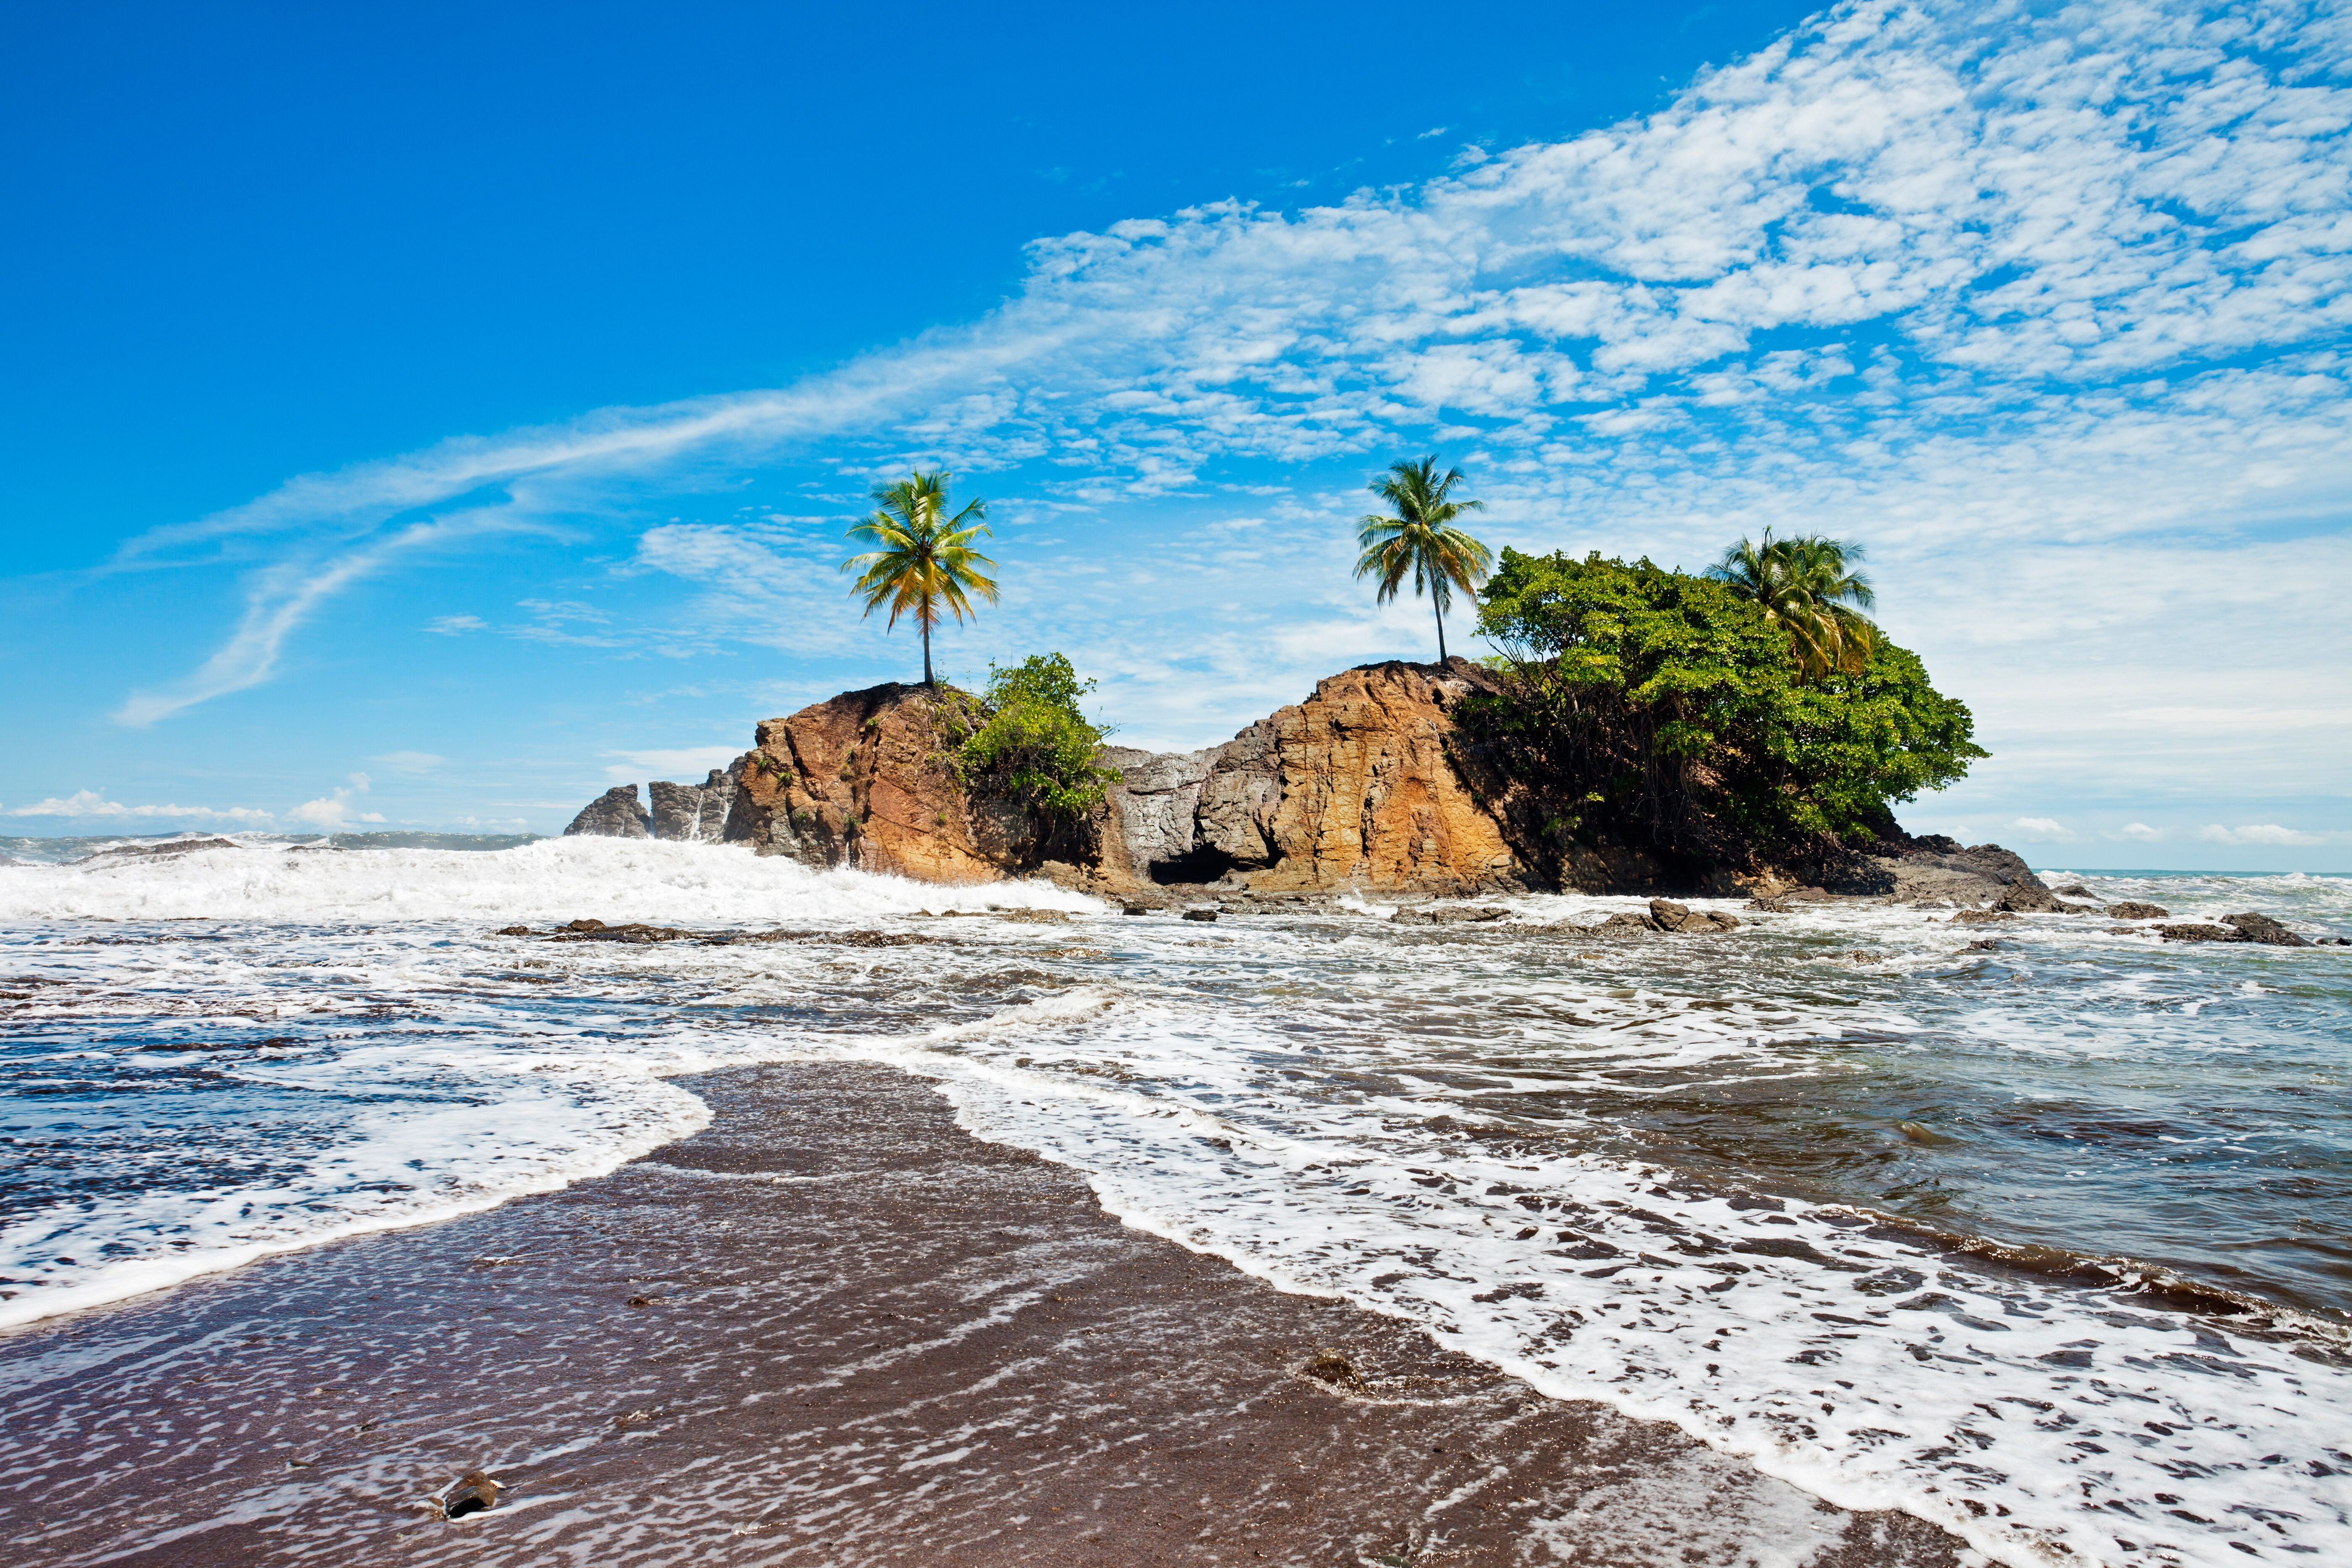 Playa Dominical, Marino Ballena national park, Pacific coast, Costa Rica